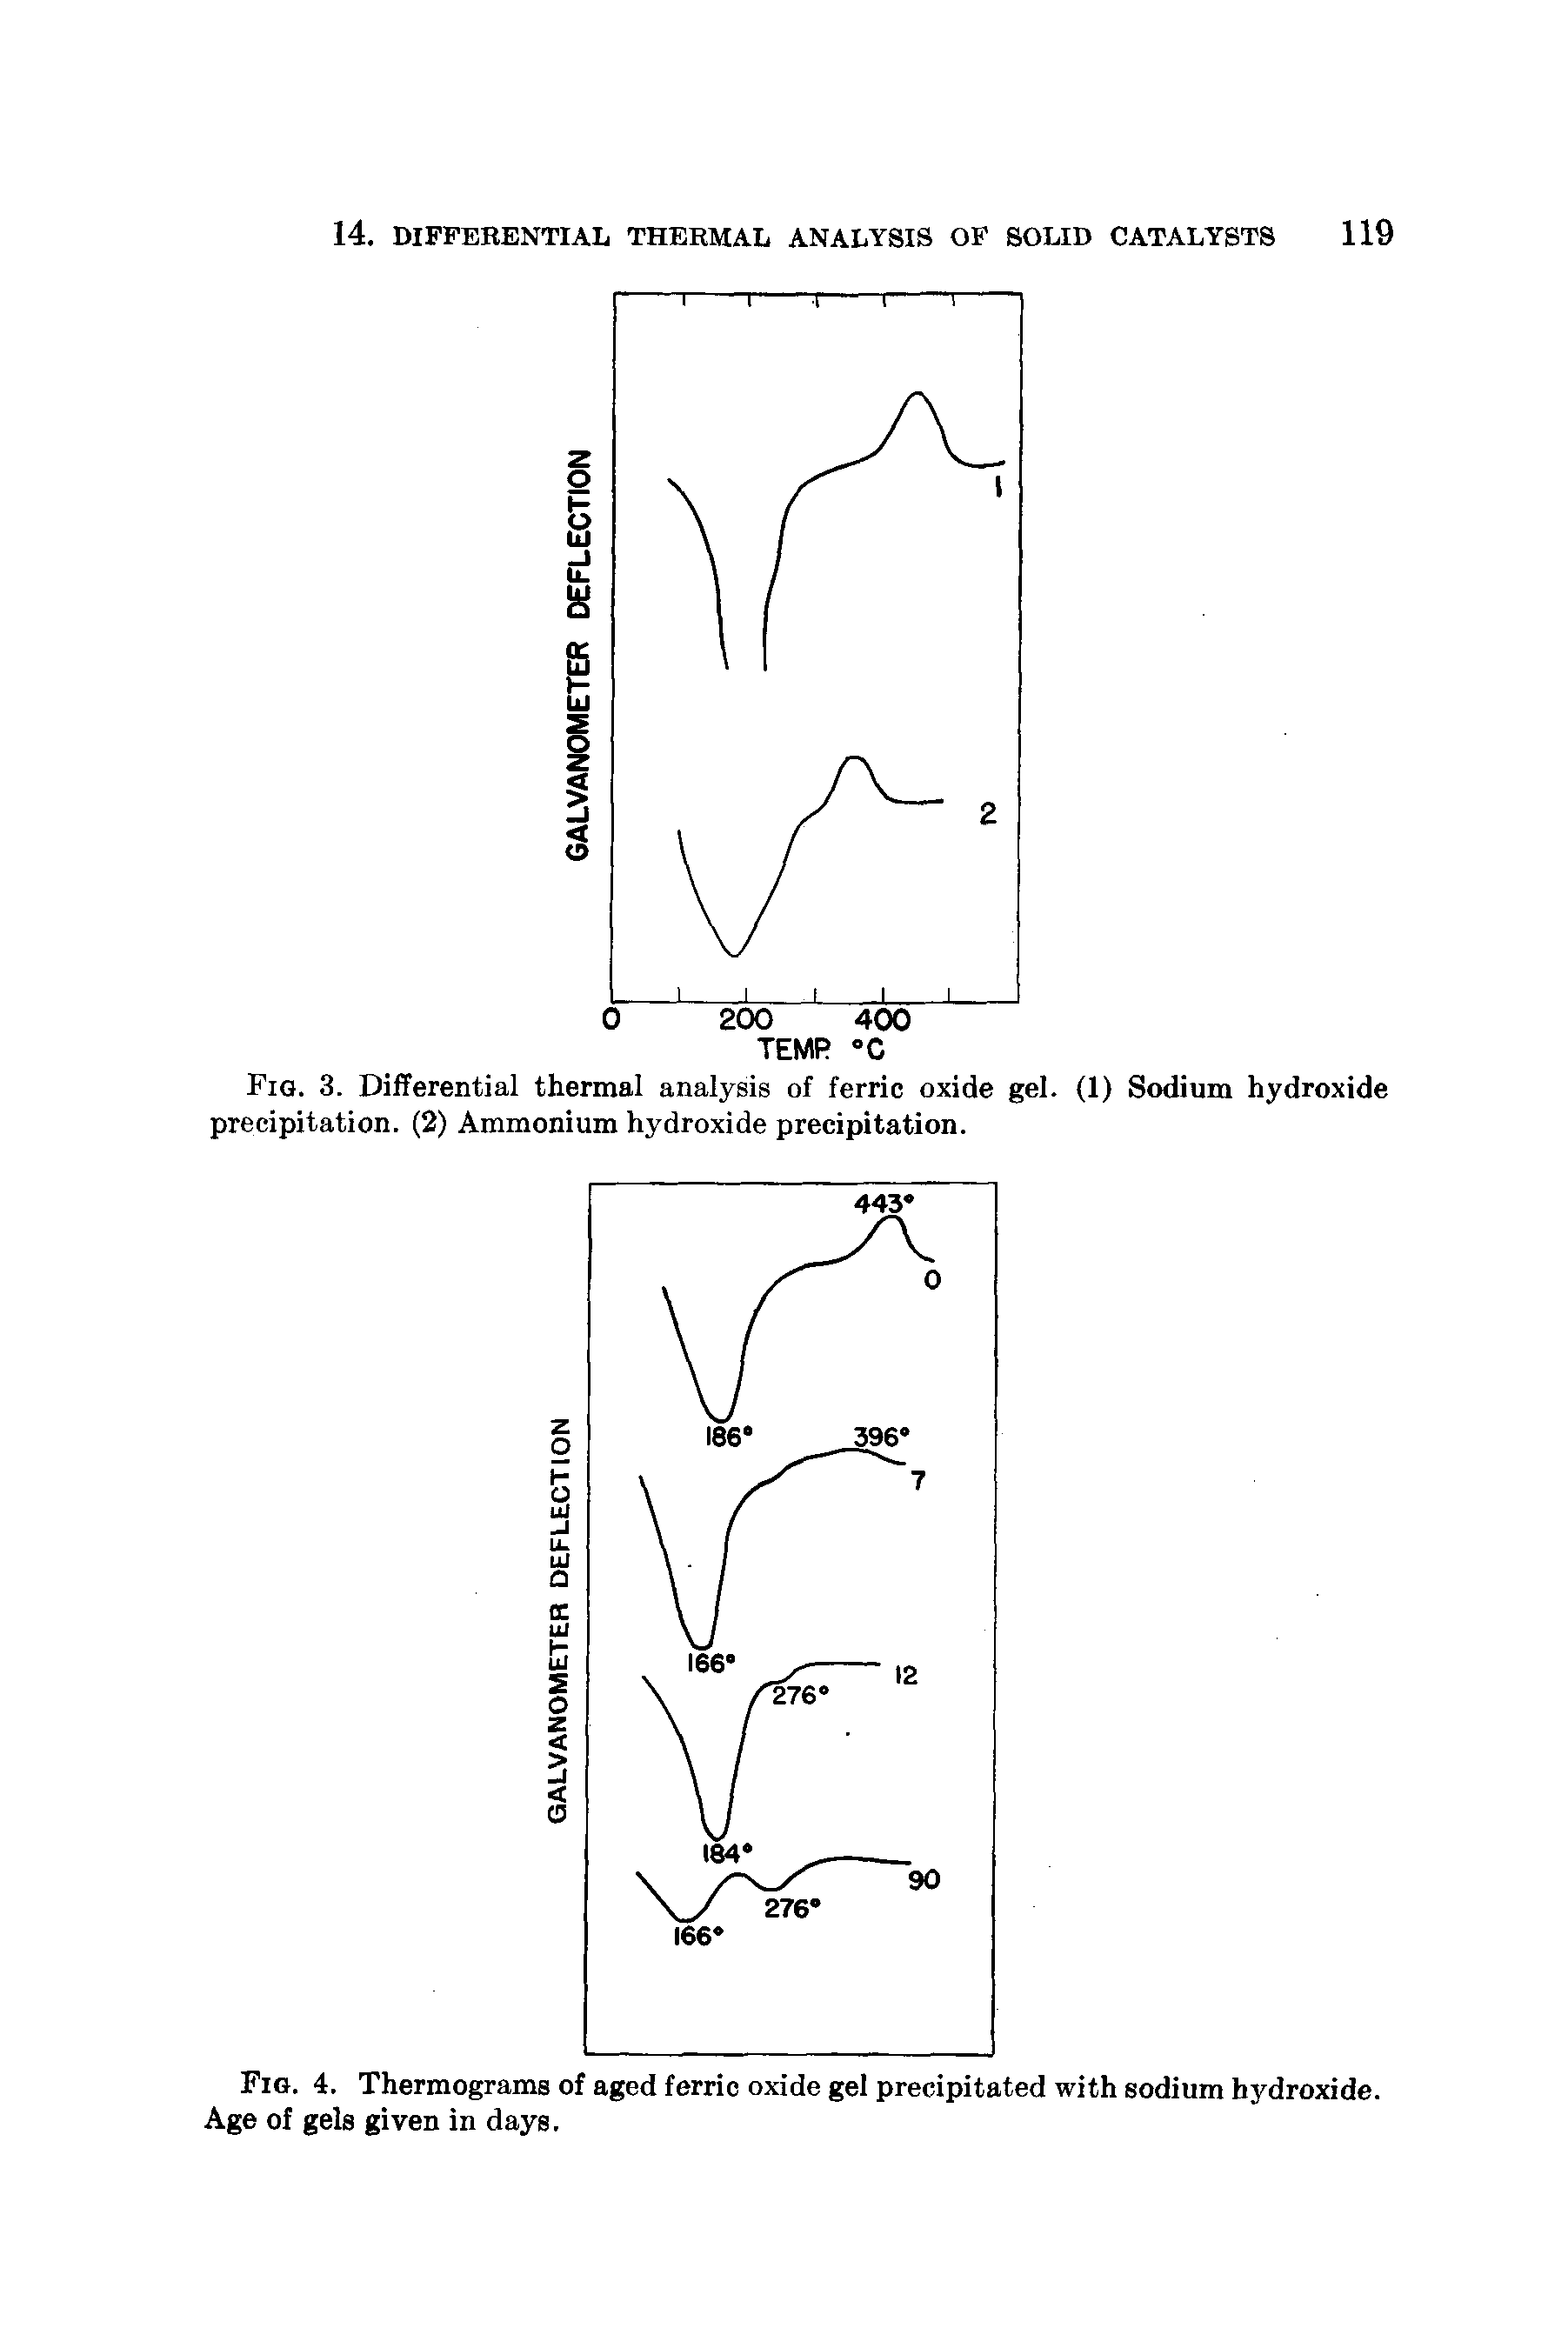 Fig. 3. Differential thermal analysis of ferric oxide gel. (1) Sodium hydroxide precipitation. (2) Ammonium hydroxide precipitation.